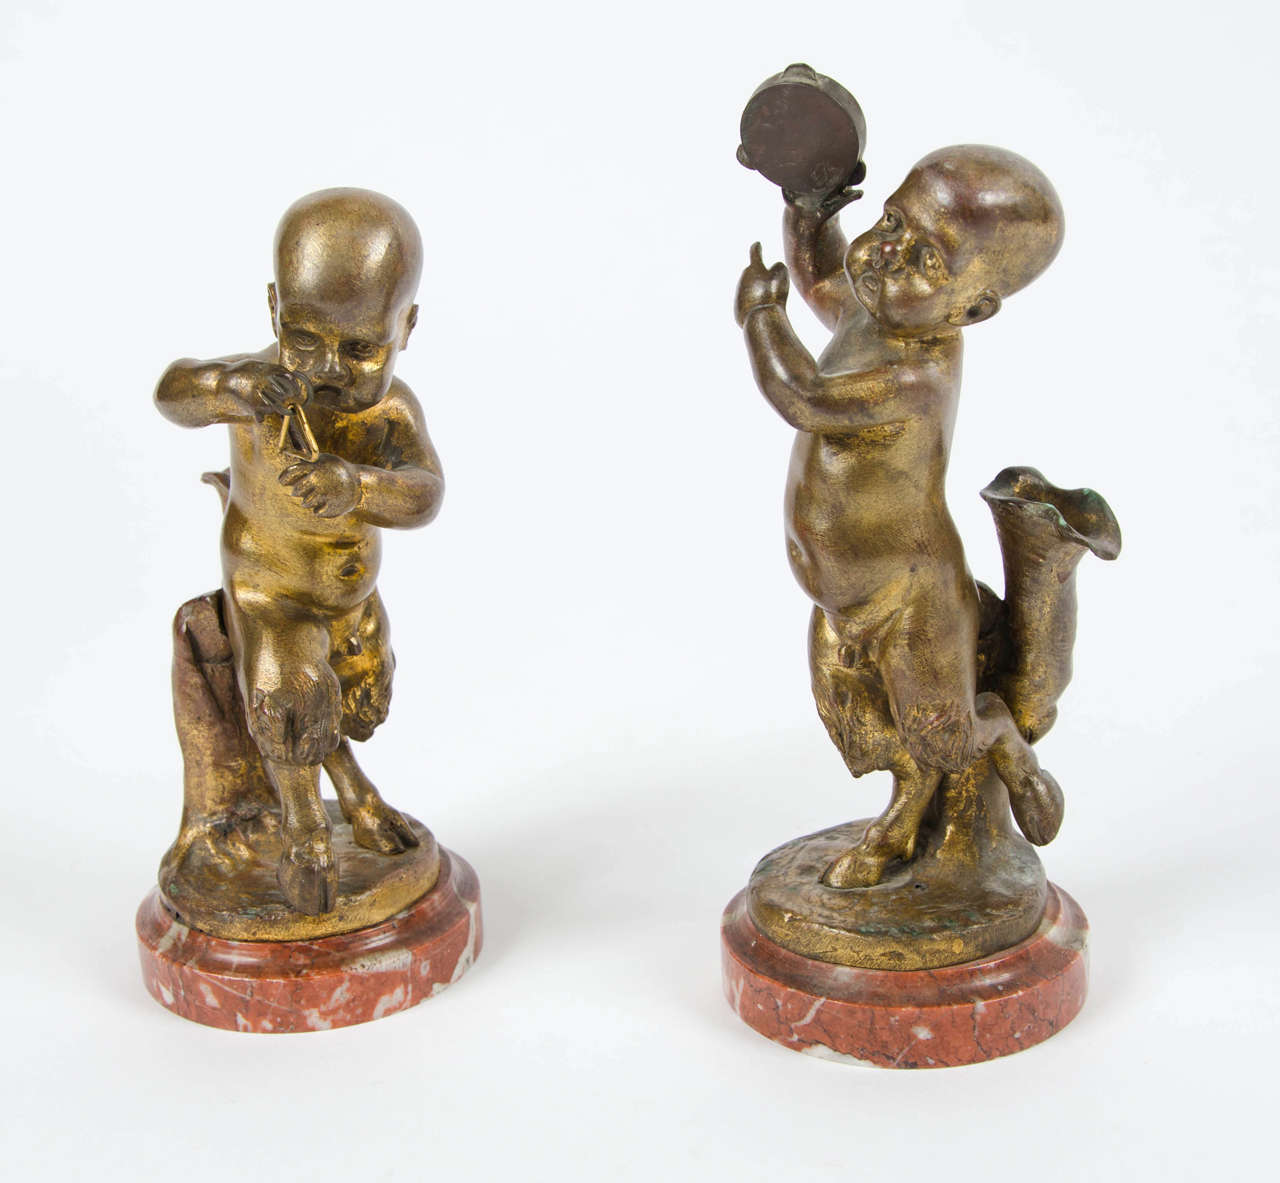 unusual pair of French ormolu Satyr-like baby fauns circa 1870